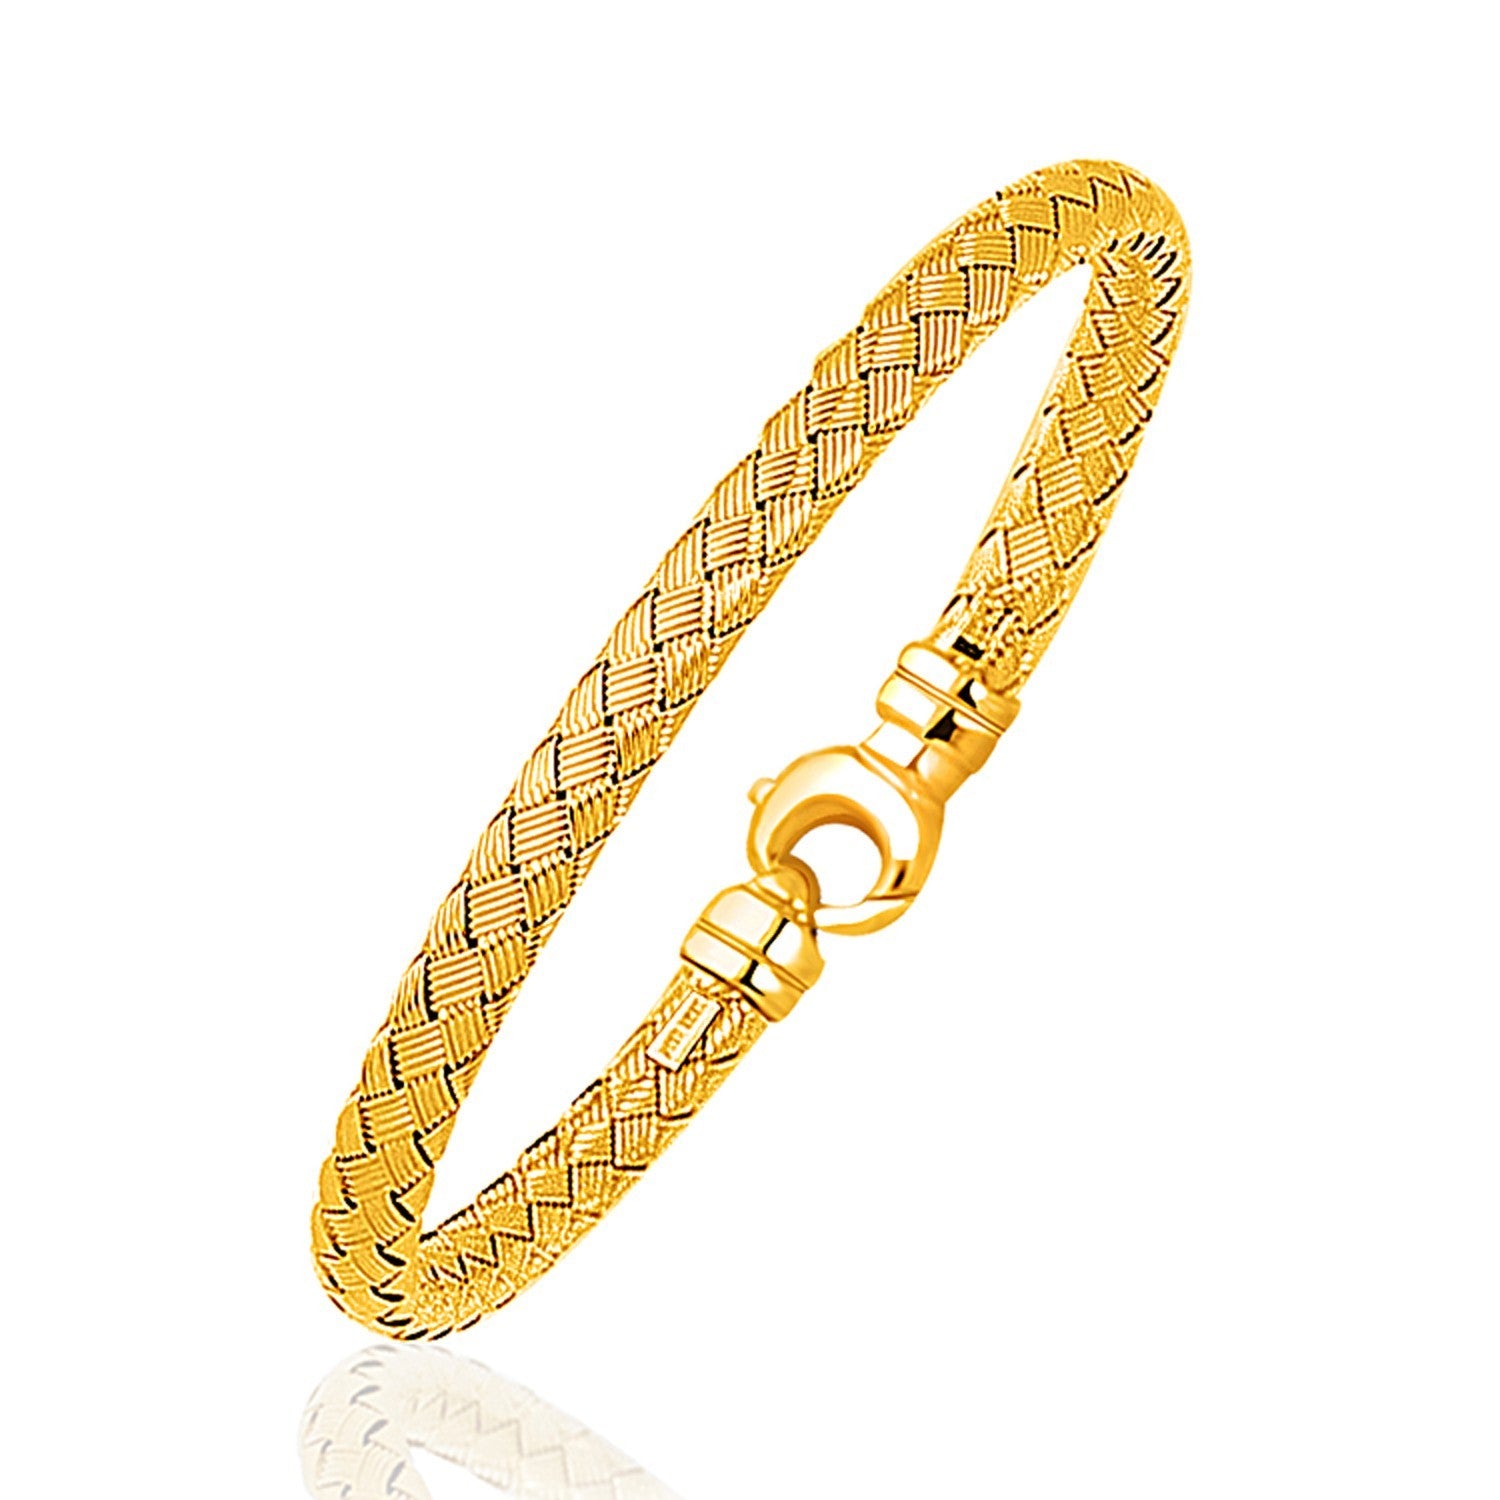 Fancy Weave Bangle in 14k Yellow Gold (5.0mm), size 7.25''